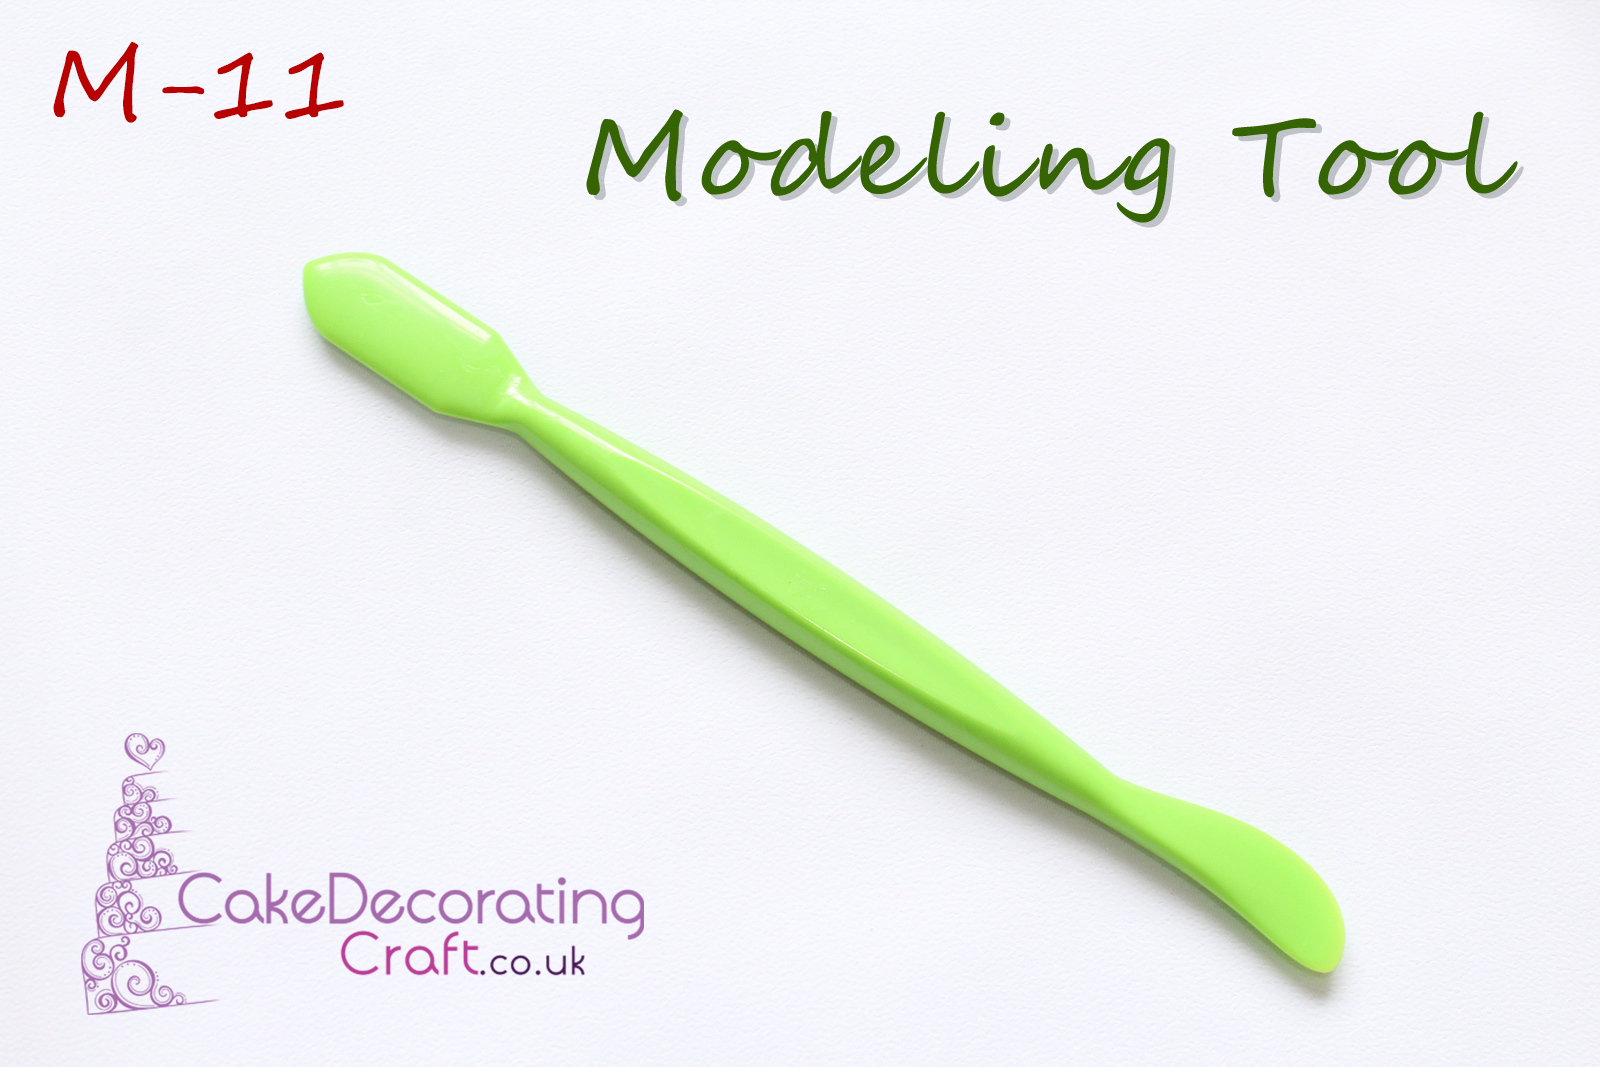 Cake Decorating Craft Modelling Tools | Double Ended | Gum Paste Flower Paste Modelling Sugar Paste Craft | M-11